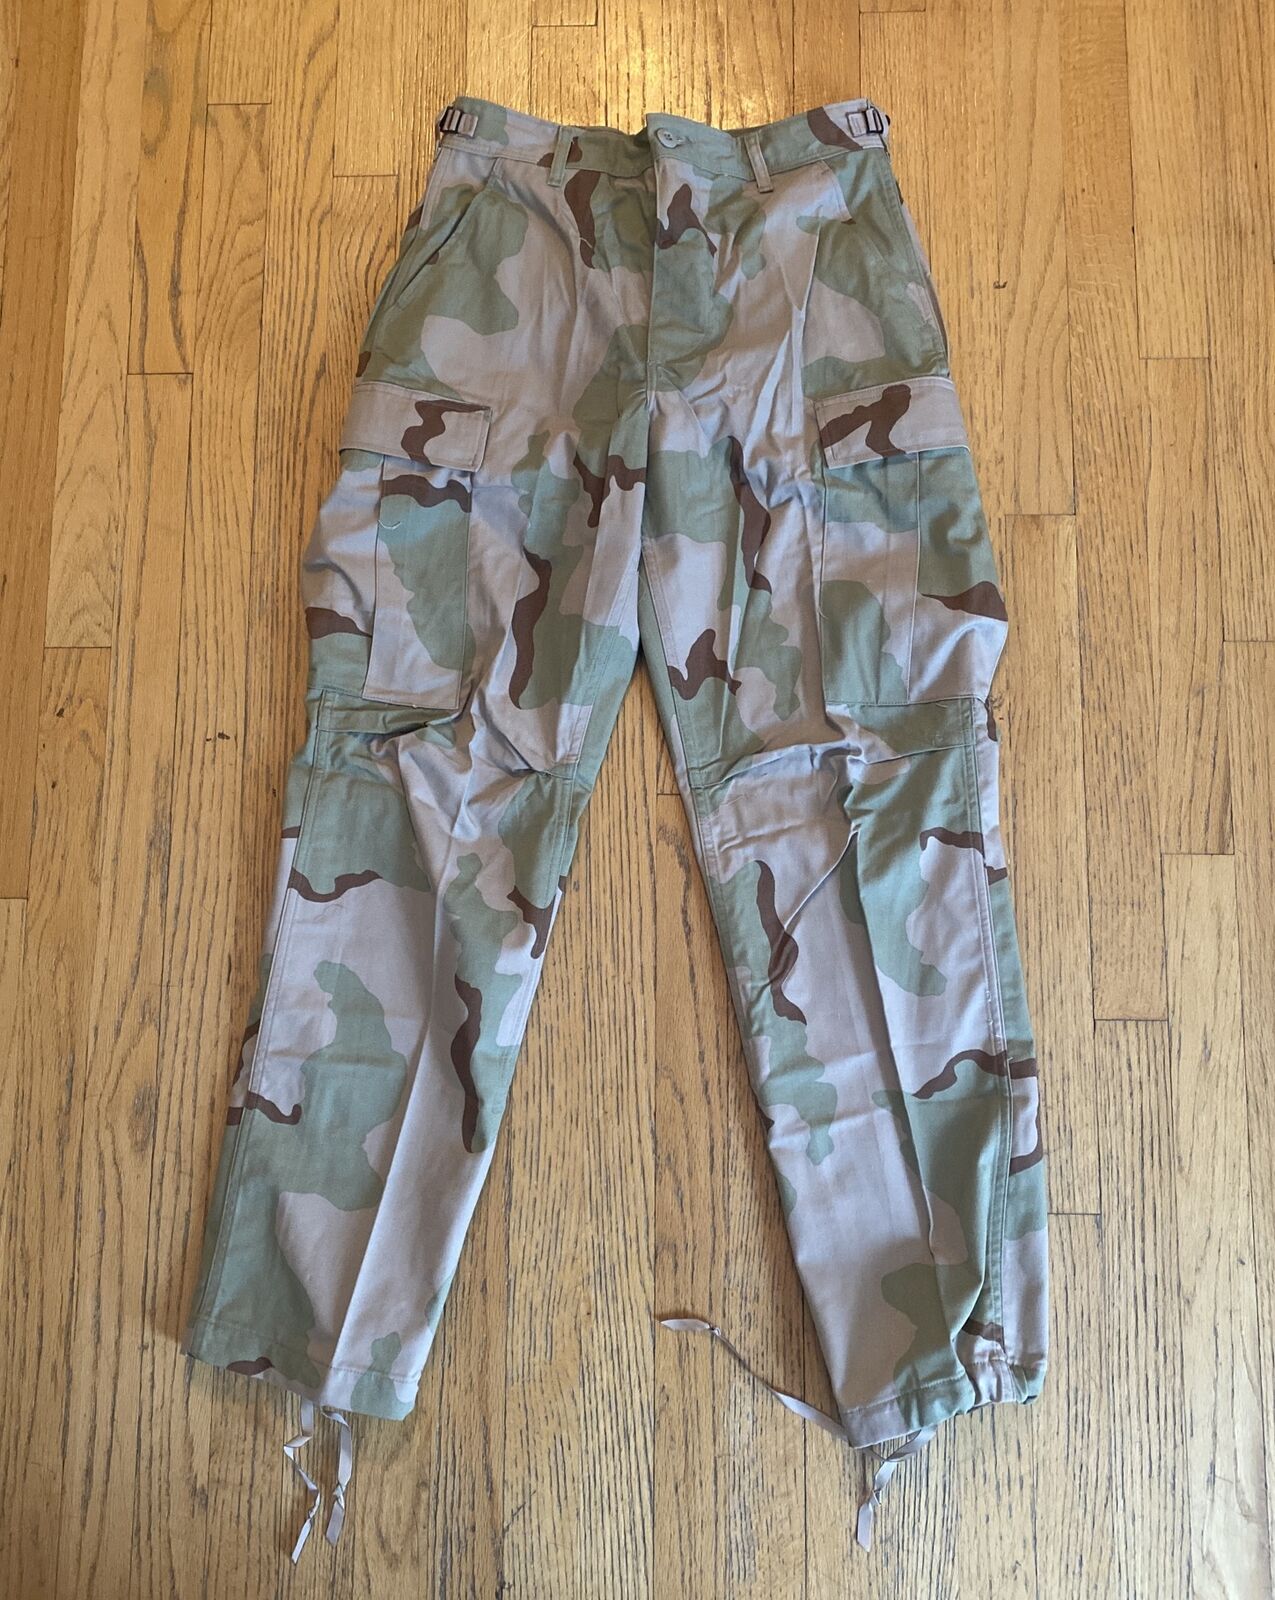 NEW USGI Military Desert Camo BDU DCU Trousers Pants Cotton/Nylon SMALL REGULAR